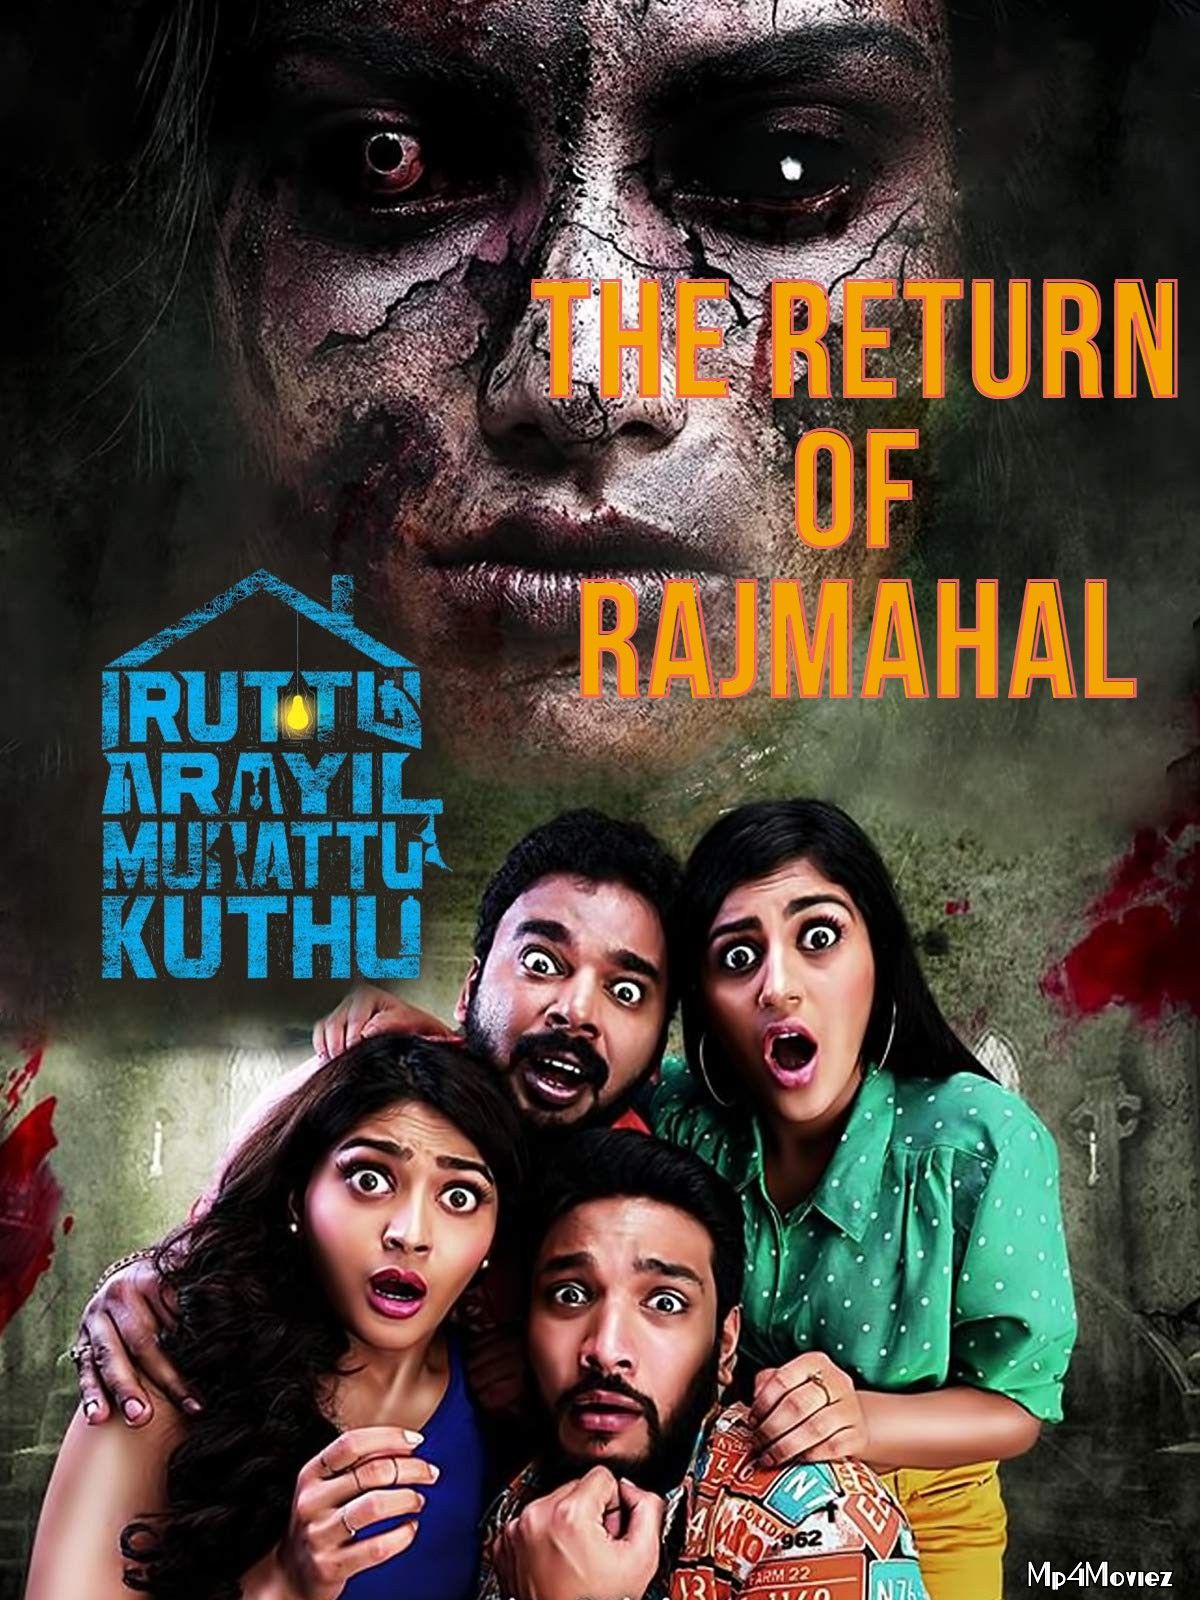 The Return Of Rajmahal (2020) Hindi Dubbed HDRip download full movie